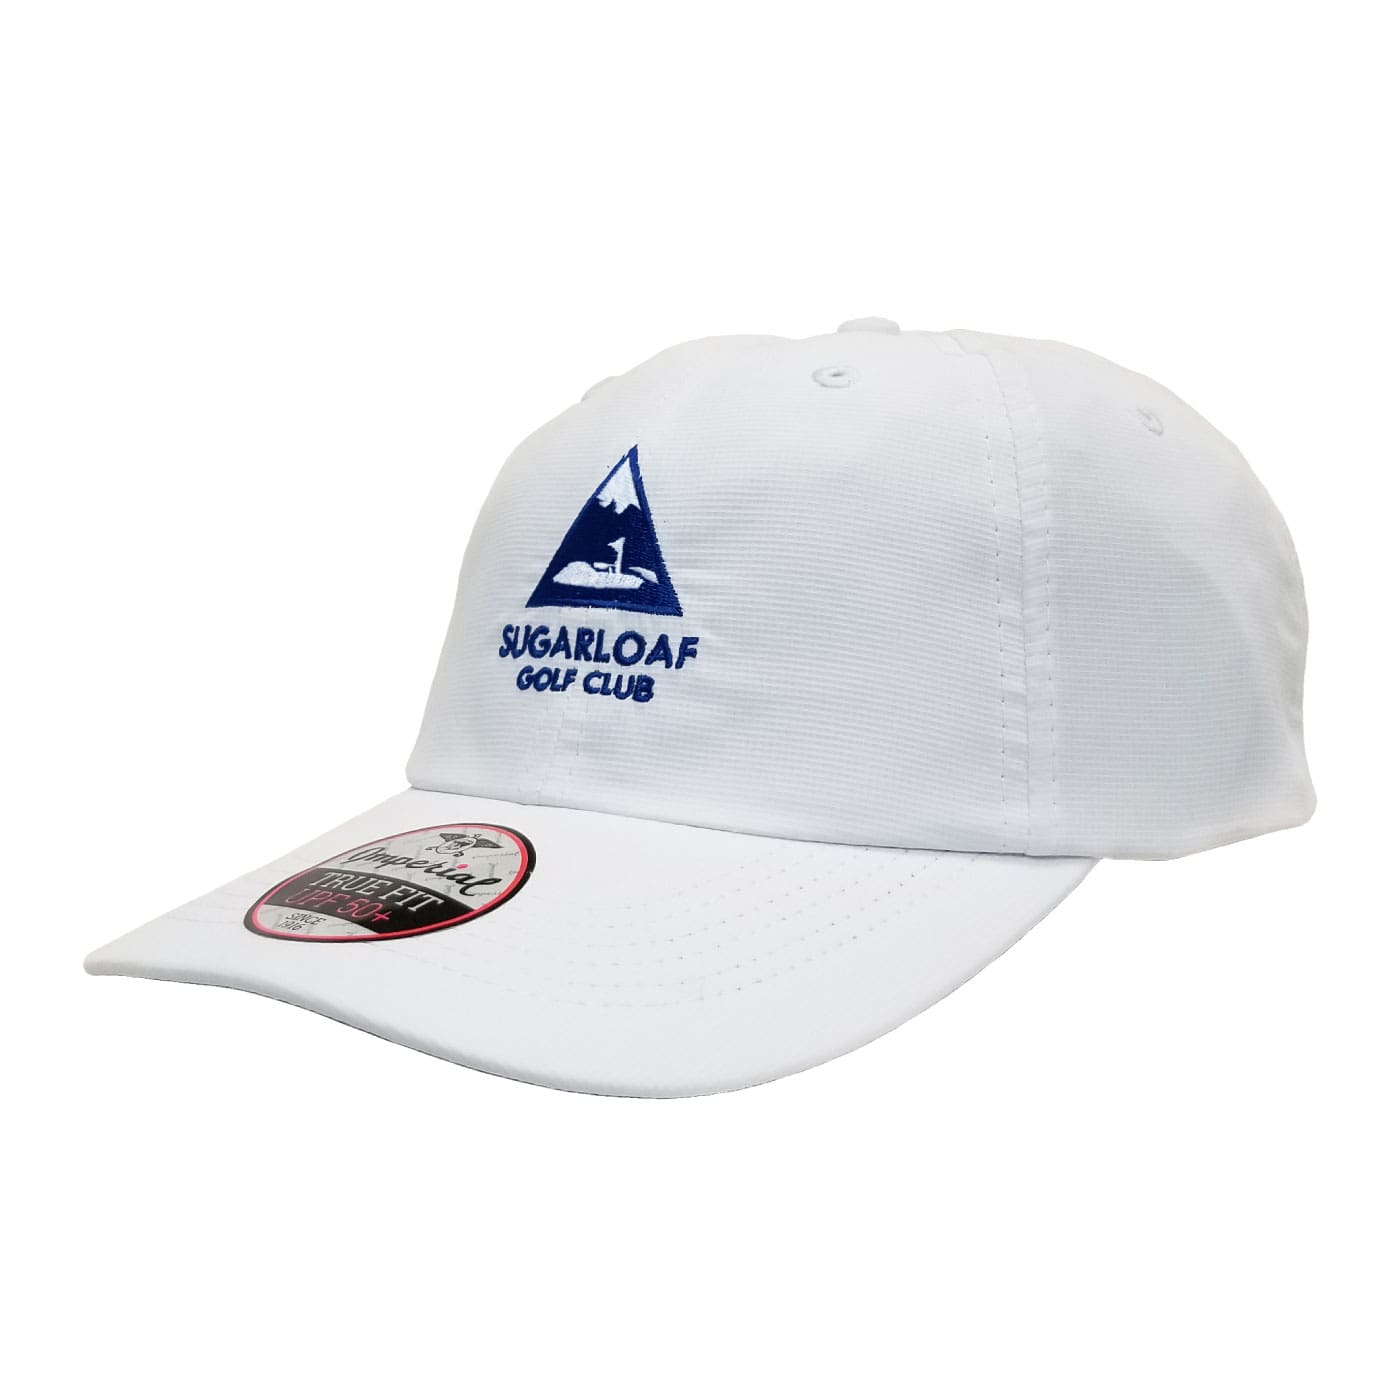 Sugarloaf Golf Club Original Performance Basic Cap WHITE